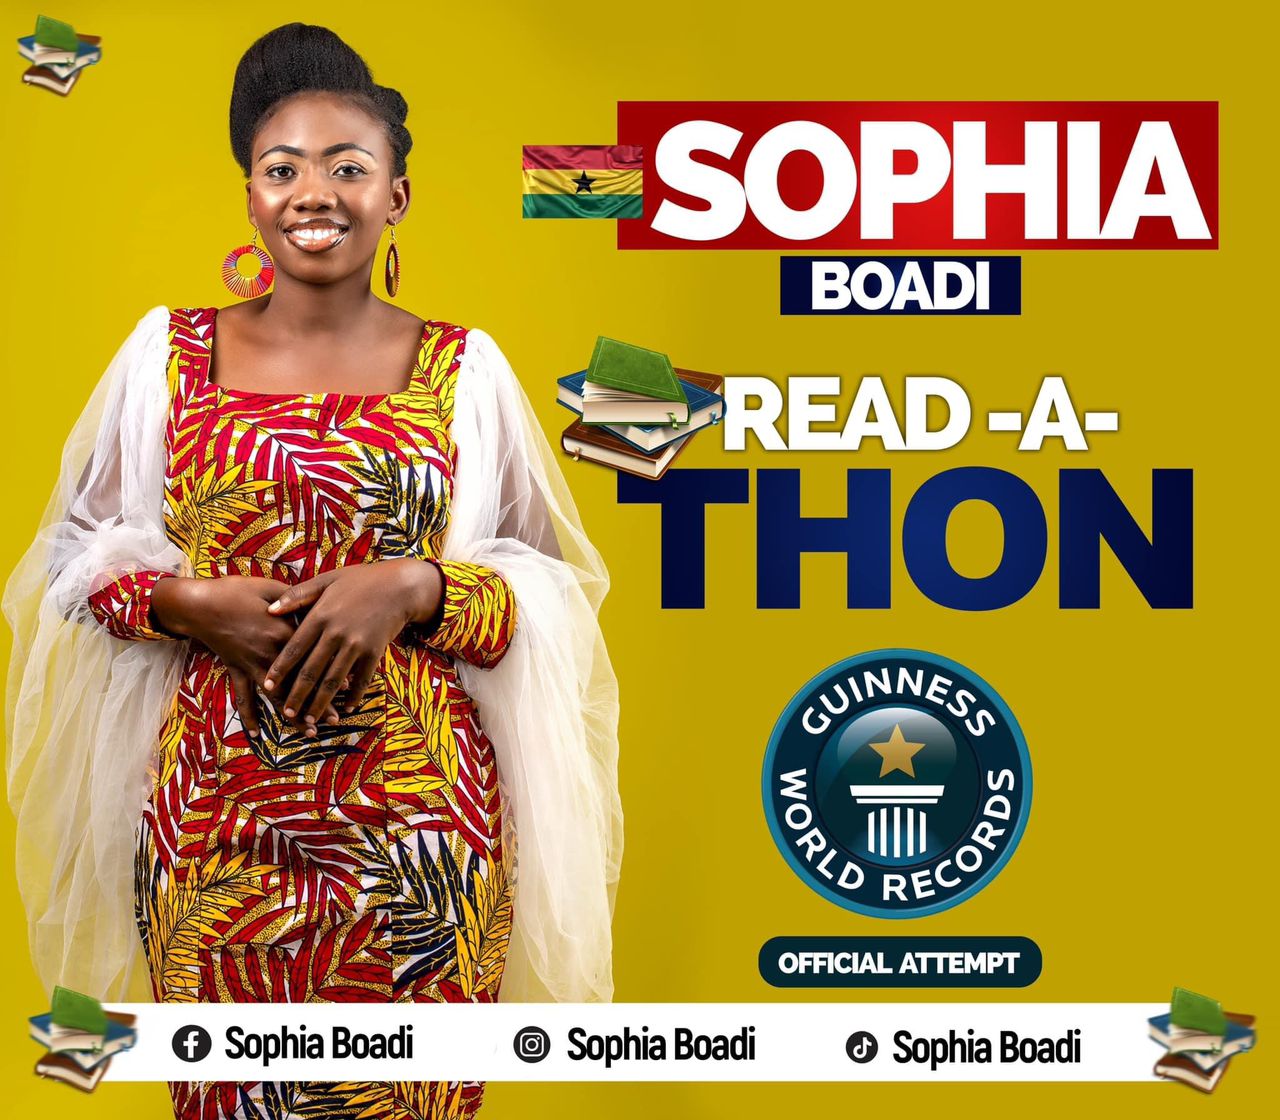 Read-A-Thon: Sophia Boadi plans to break Guinness World Record for Reading